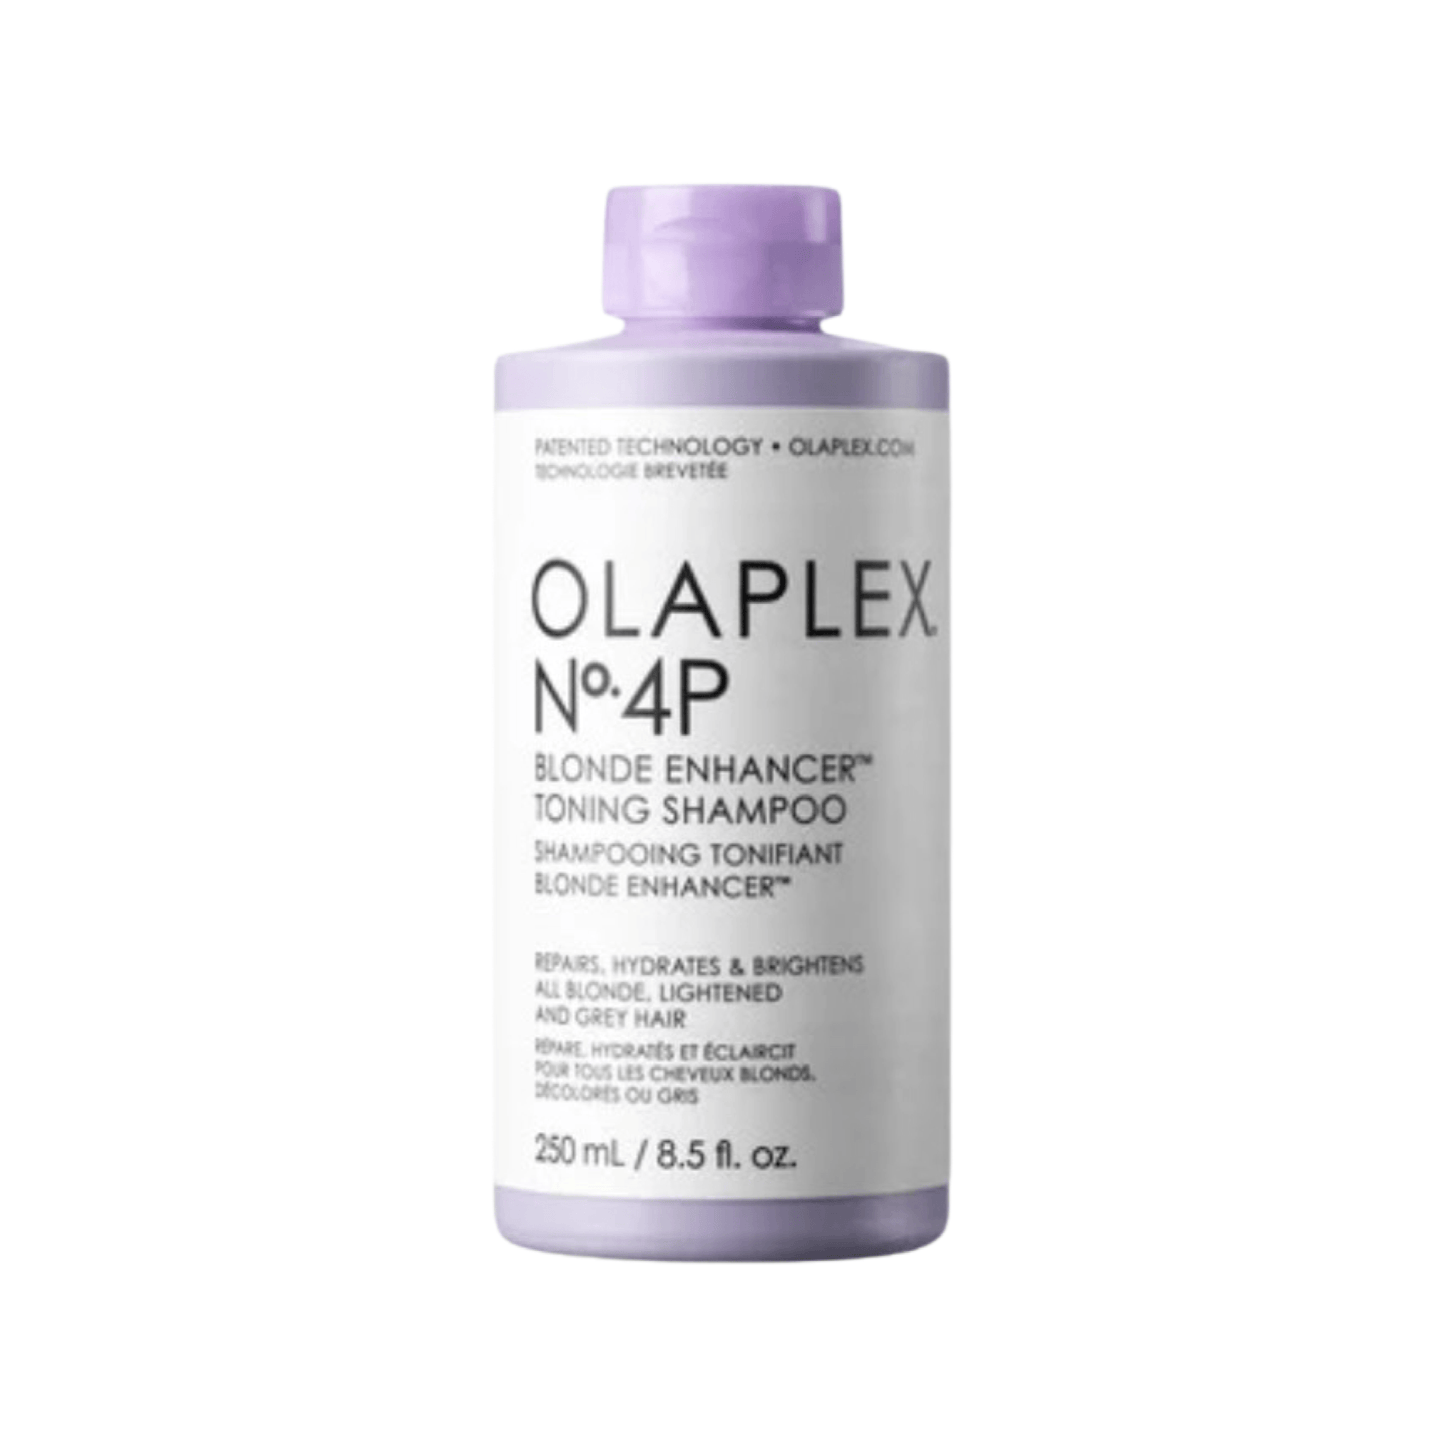 Olaplex NO.4P Blonde Enhancer Toning Shampoo 250 ml